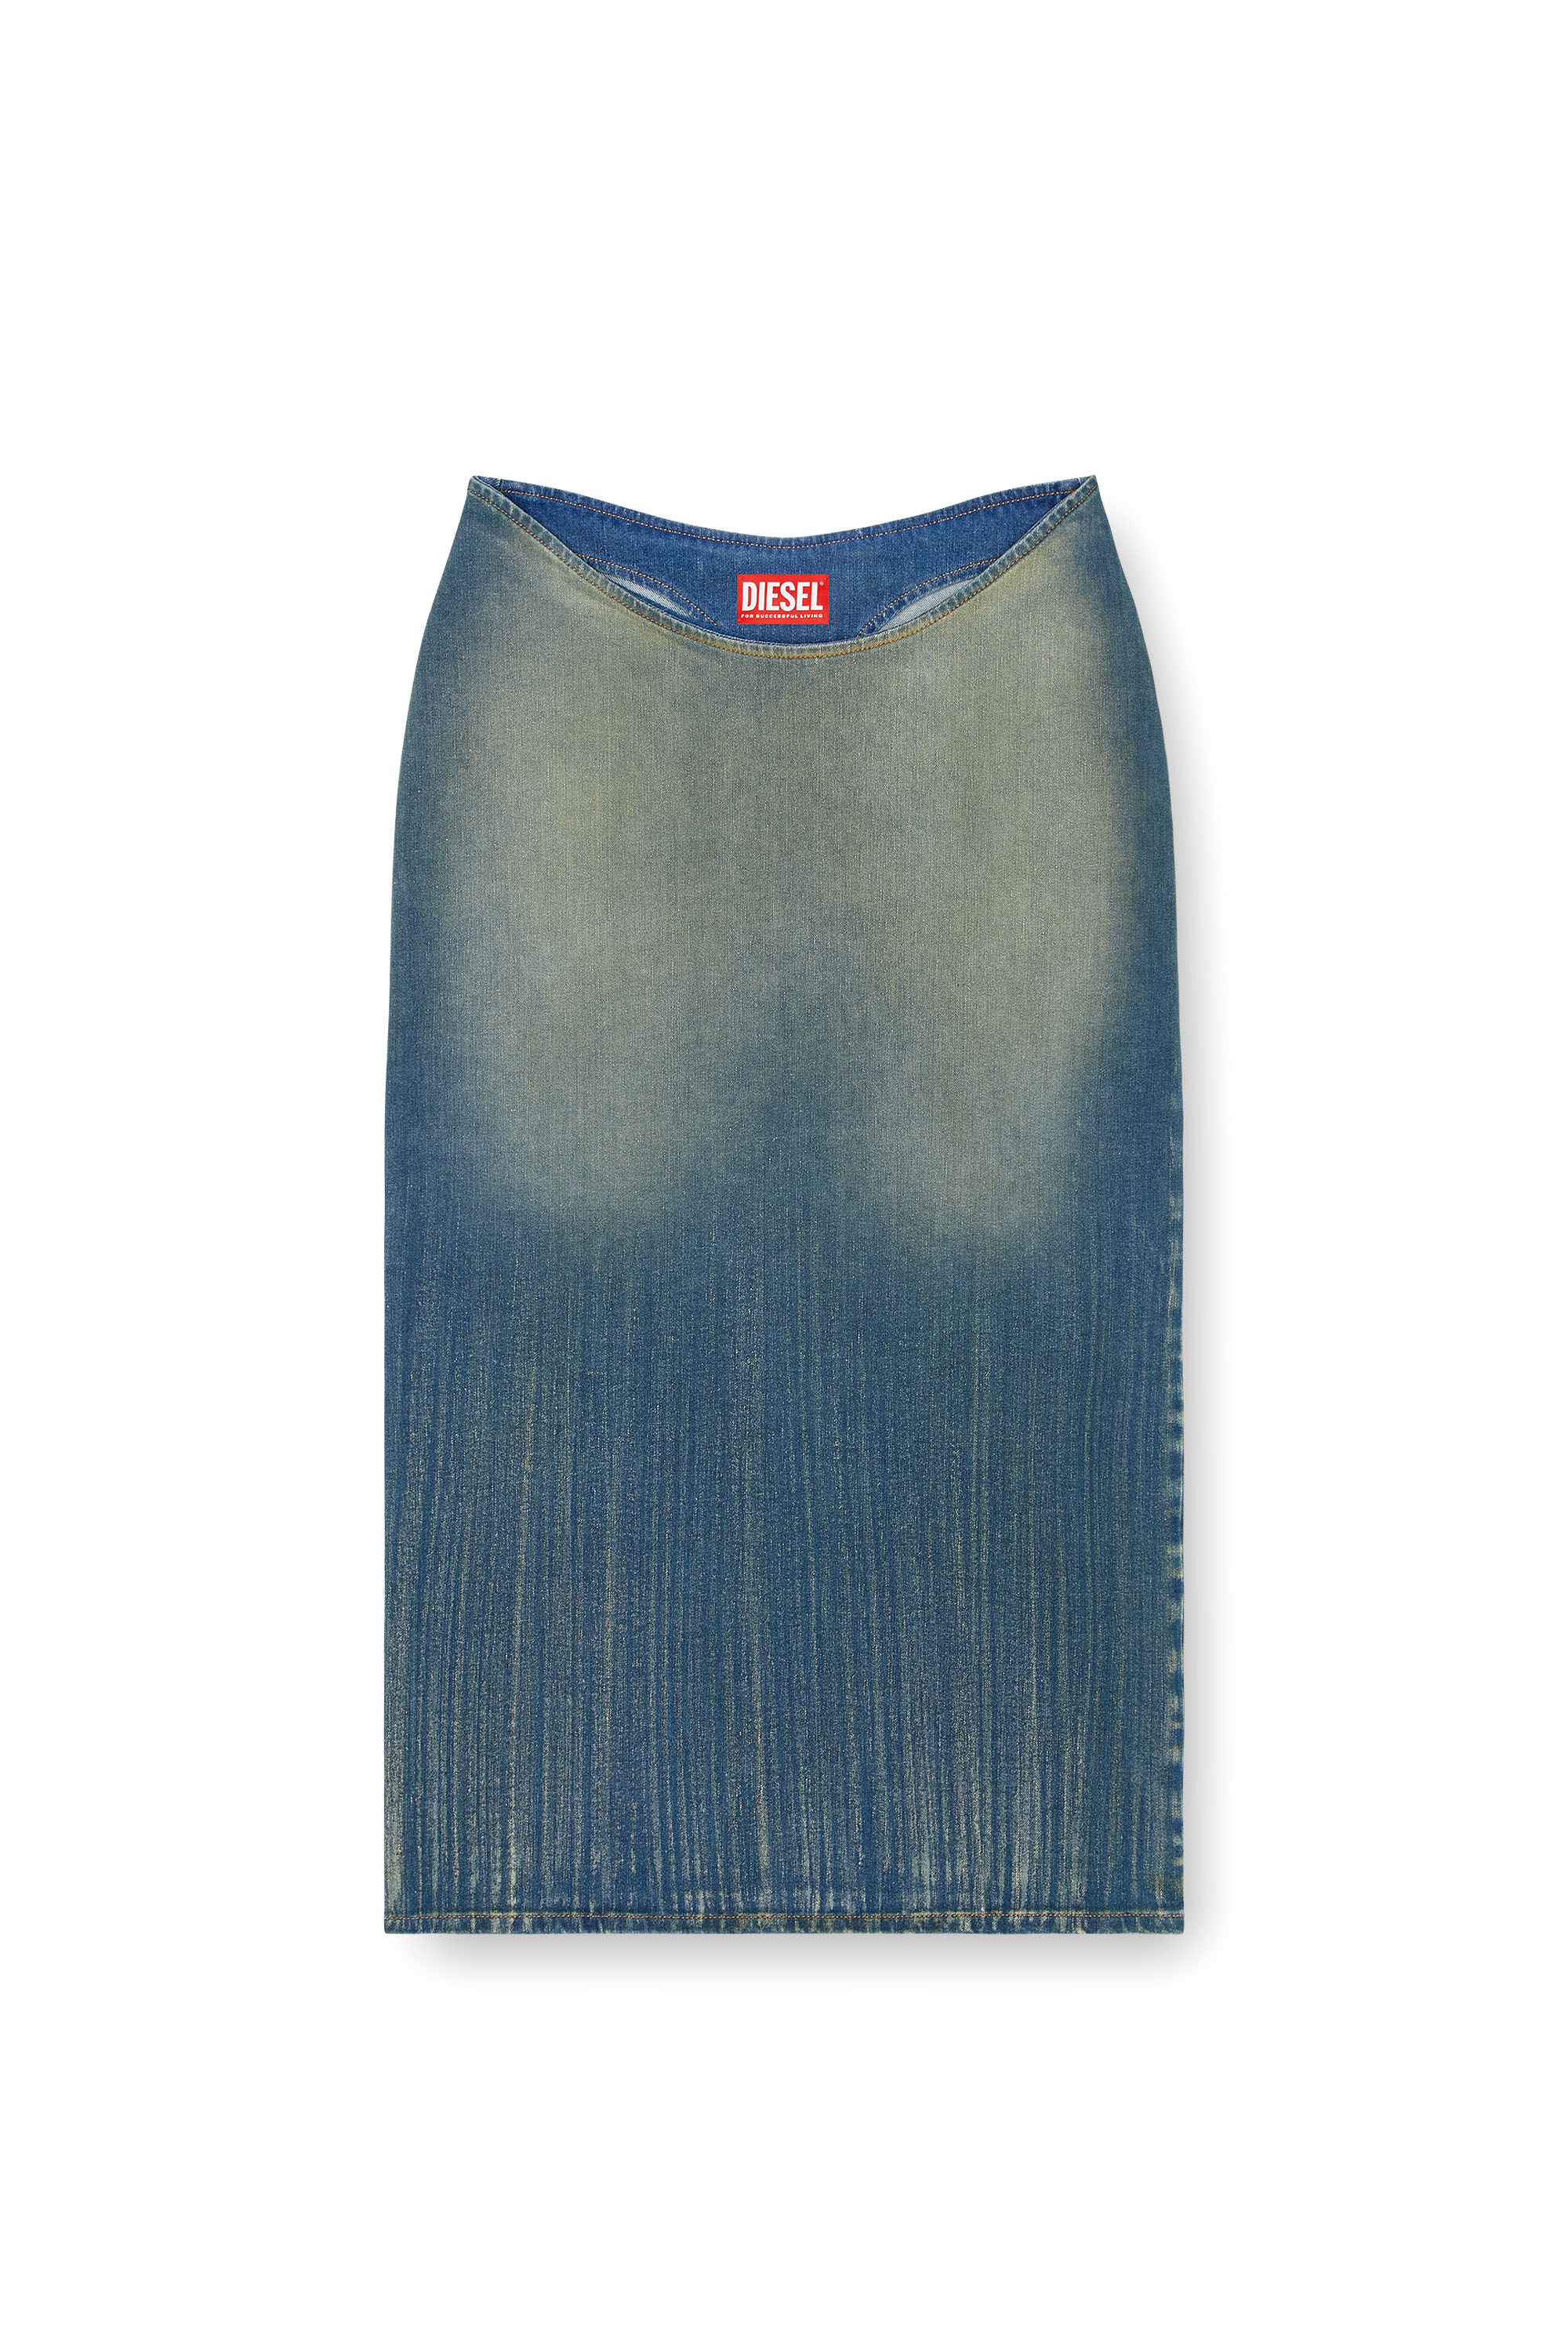 Diesel - DE-MAURY-S, Female Pencil skirt in light streaky denim in Blue - Image 3